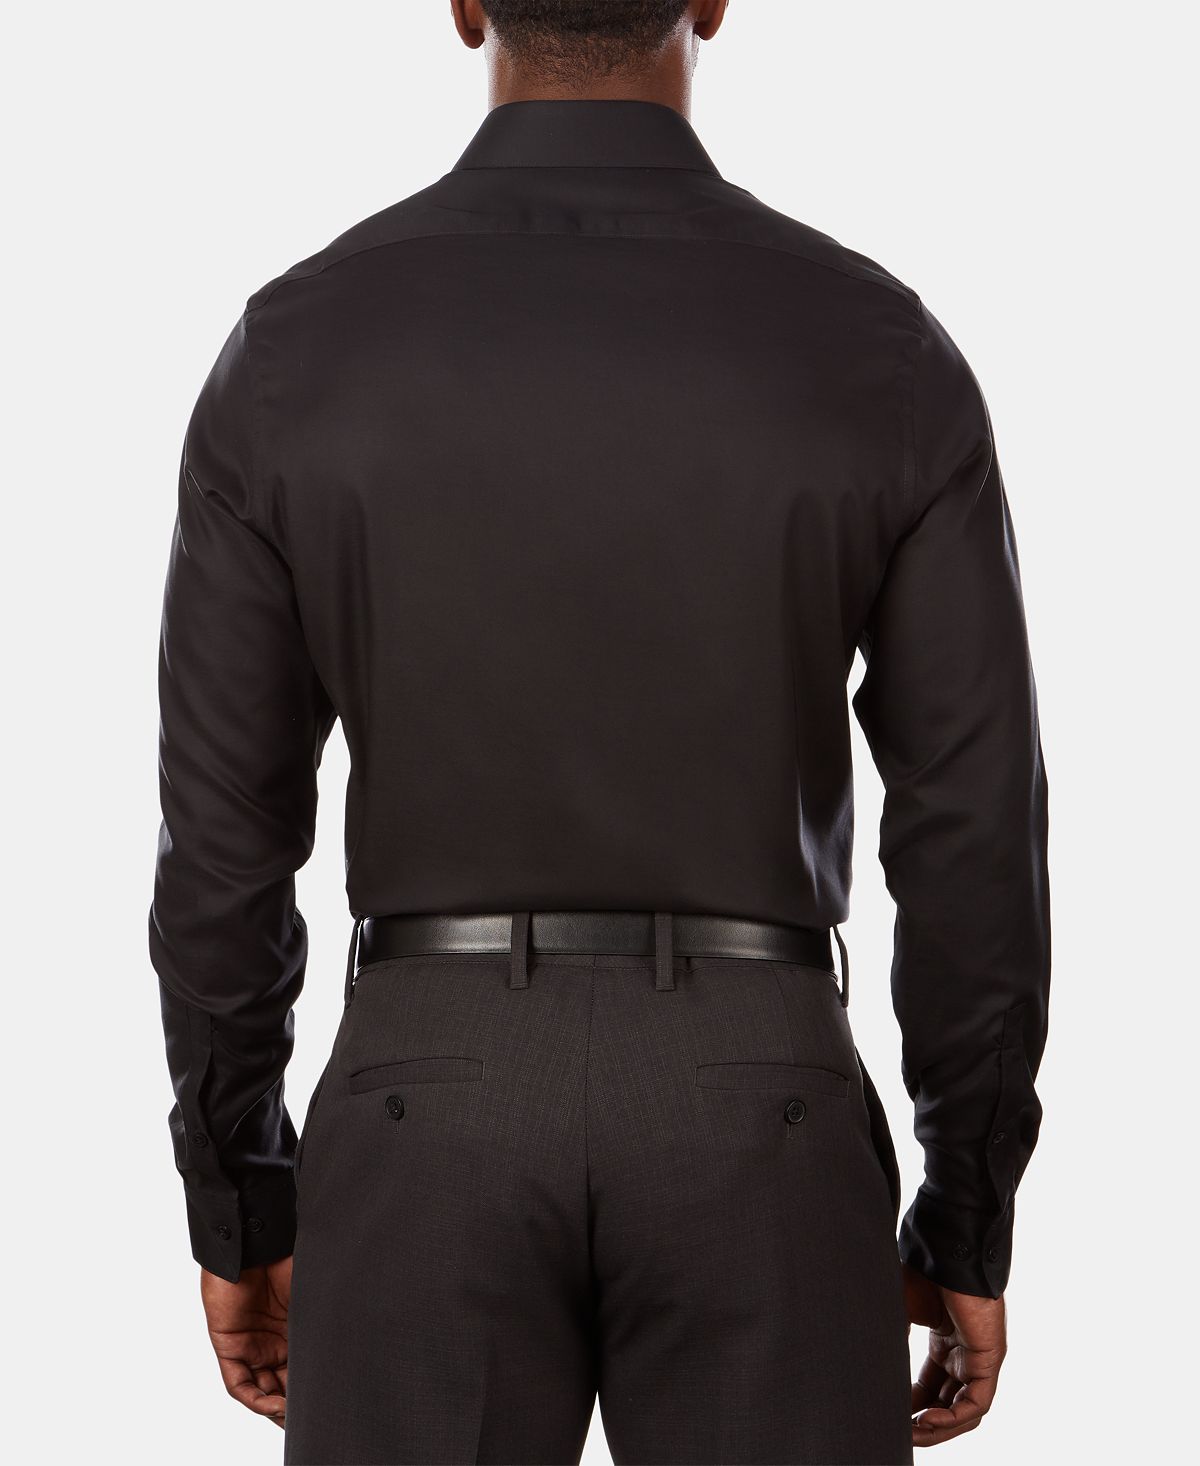 Calvin Klein Steel Slim-fit Non-iron Stretch Performance Dress Shirt Jet Black